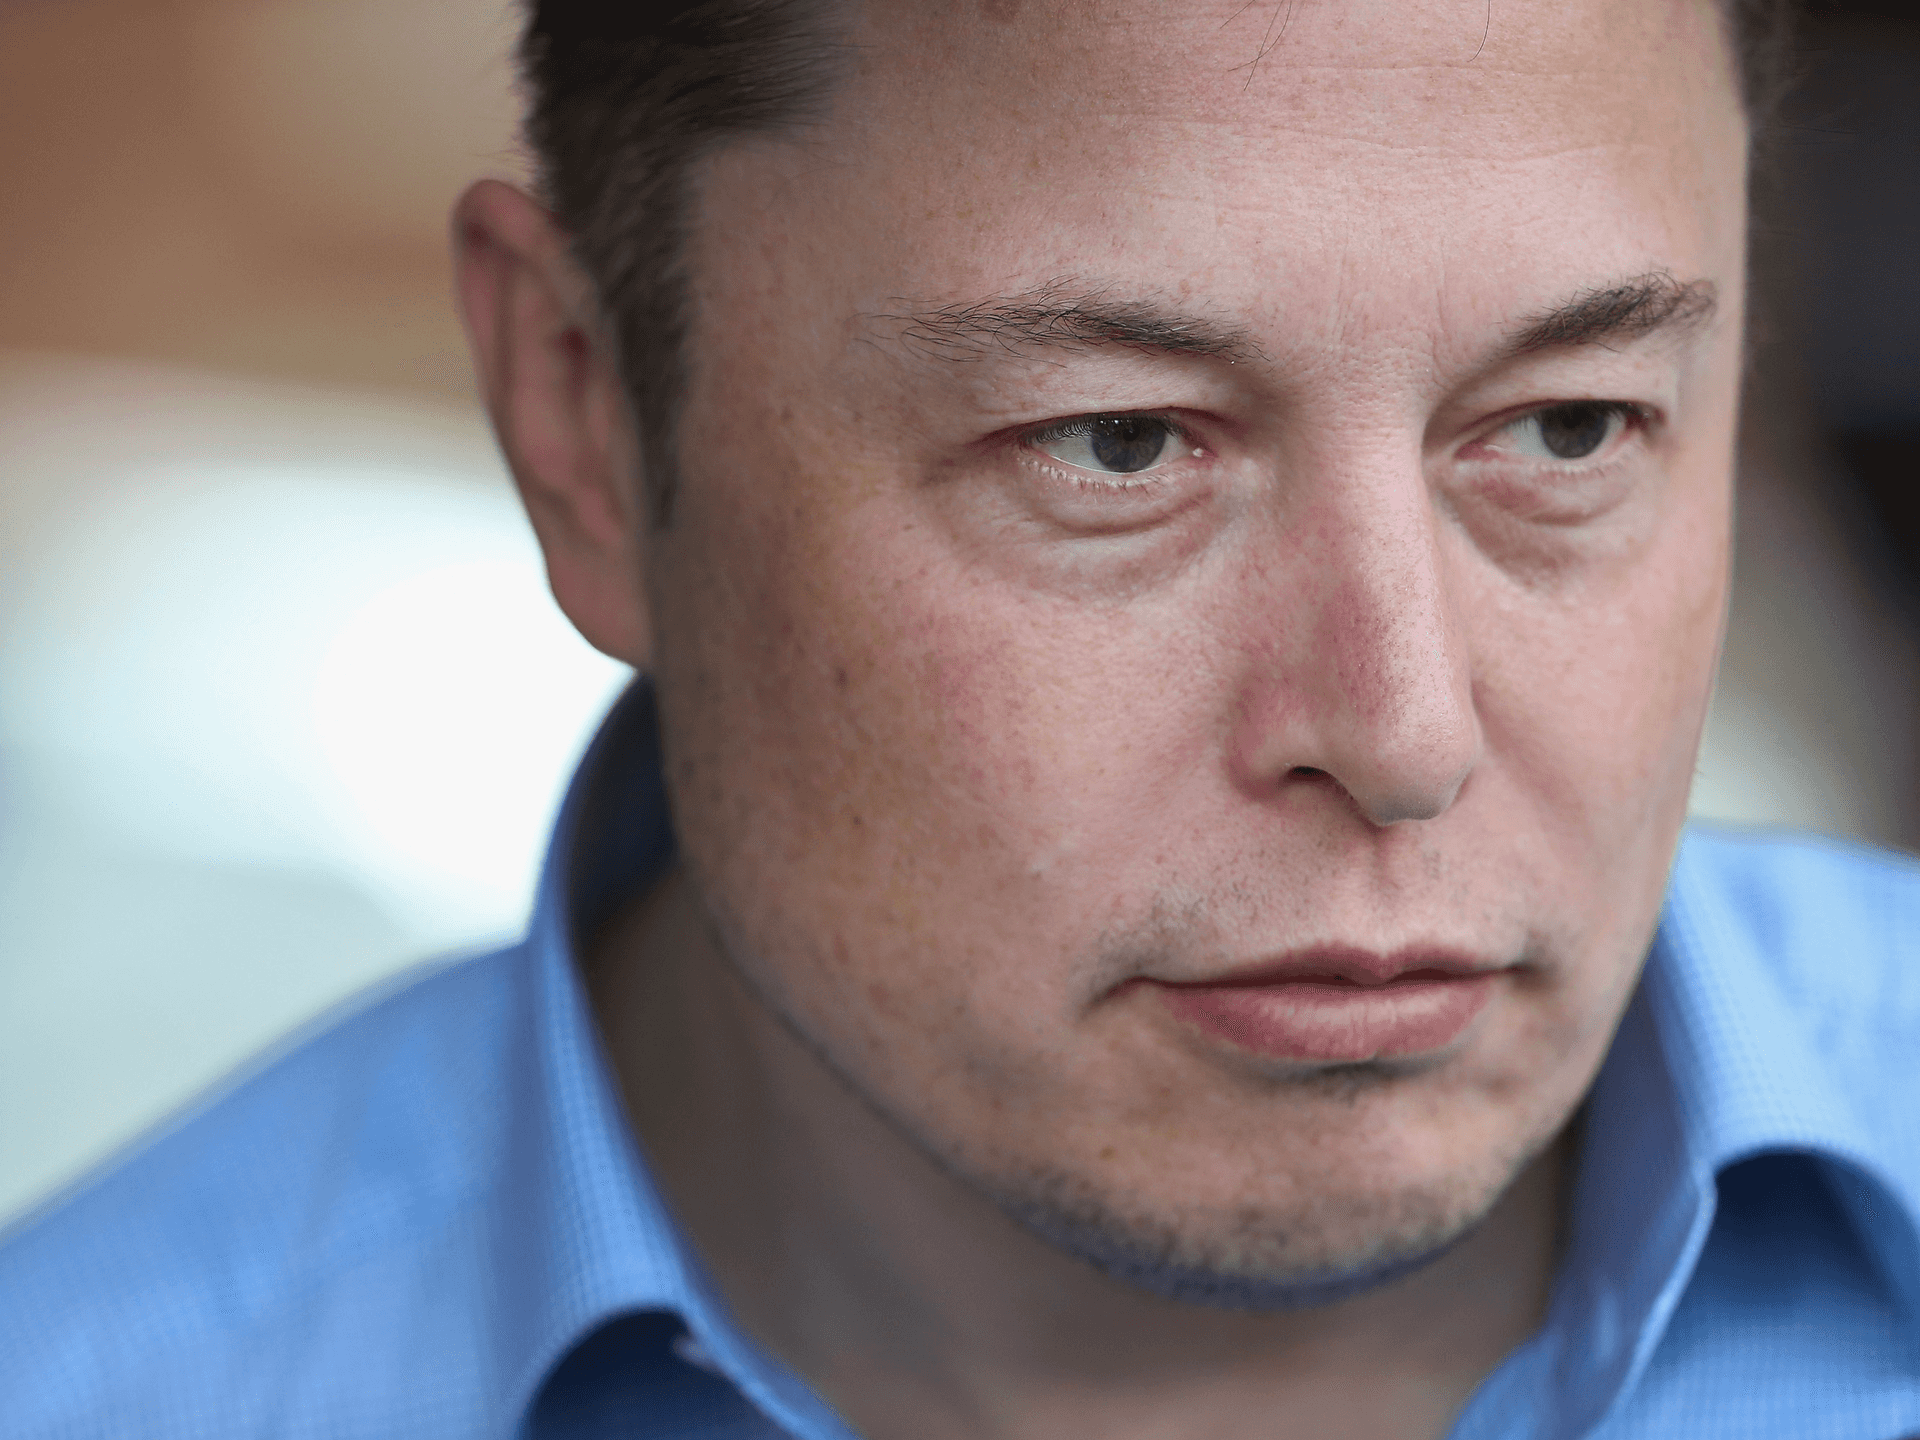 Elonmusk Kigger Direkte På Kameraet.